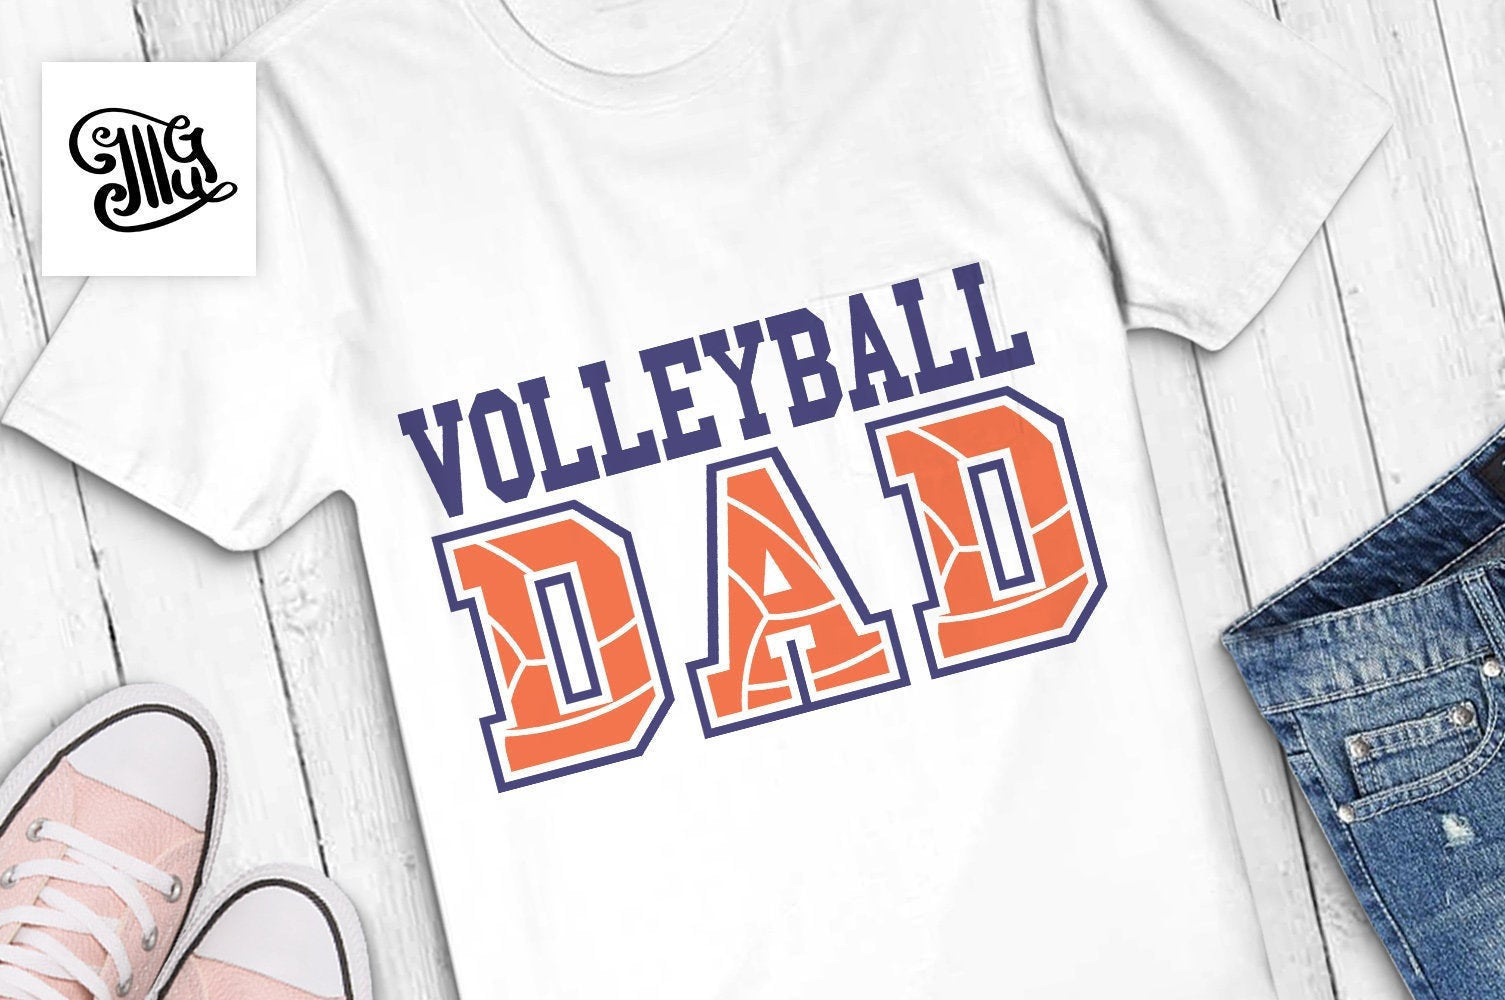 Download Volleyball dad svg, volleyball svg, volleyball dad shirt ...